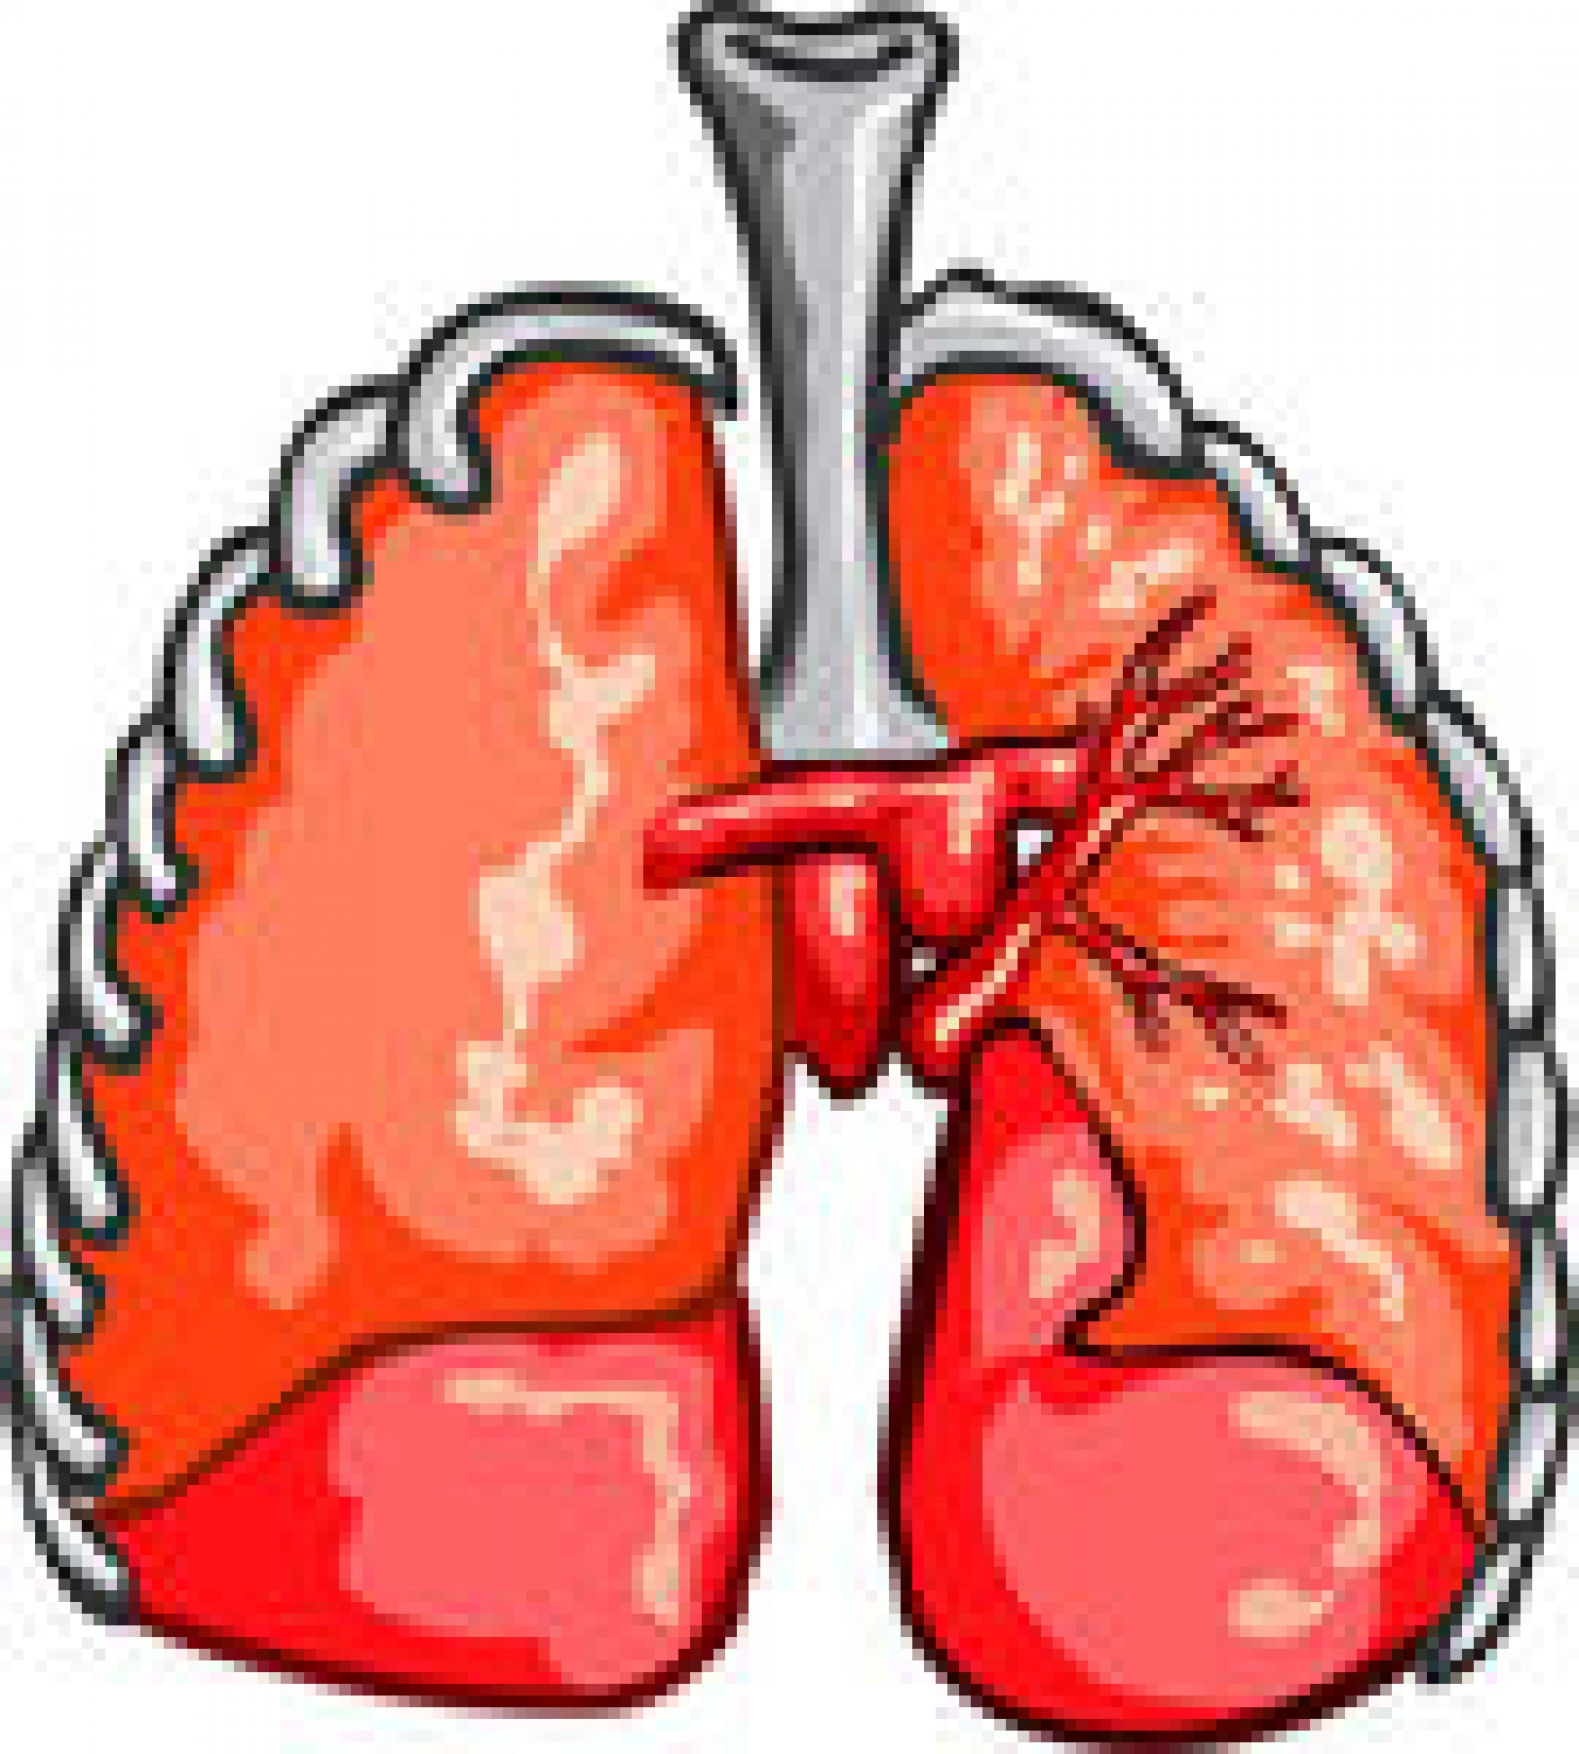 lungs clipart heathy